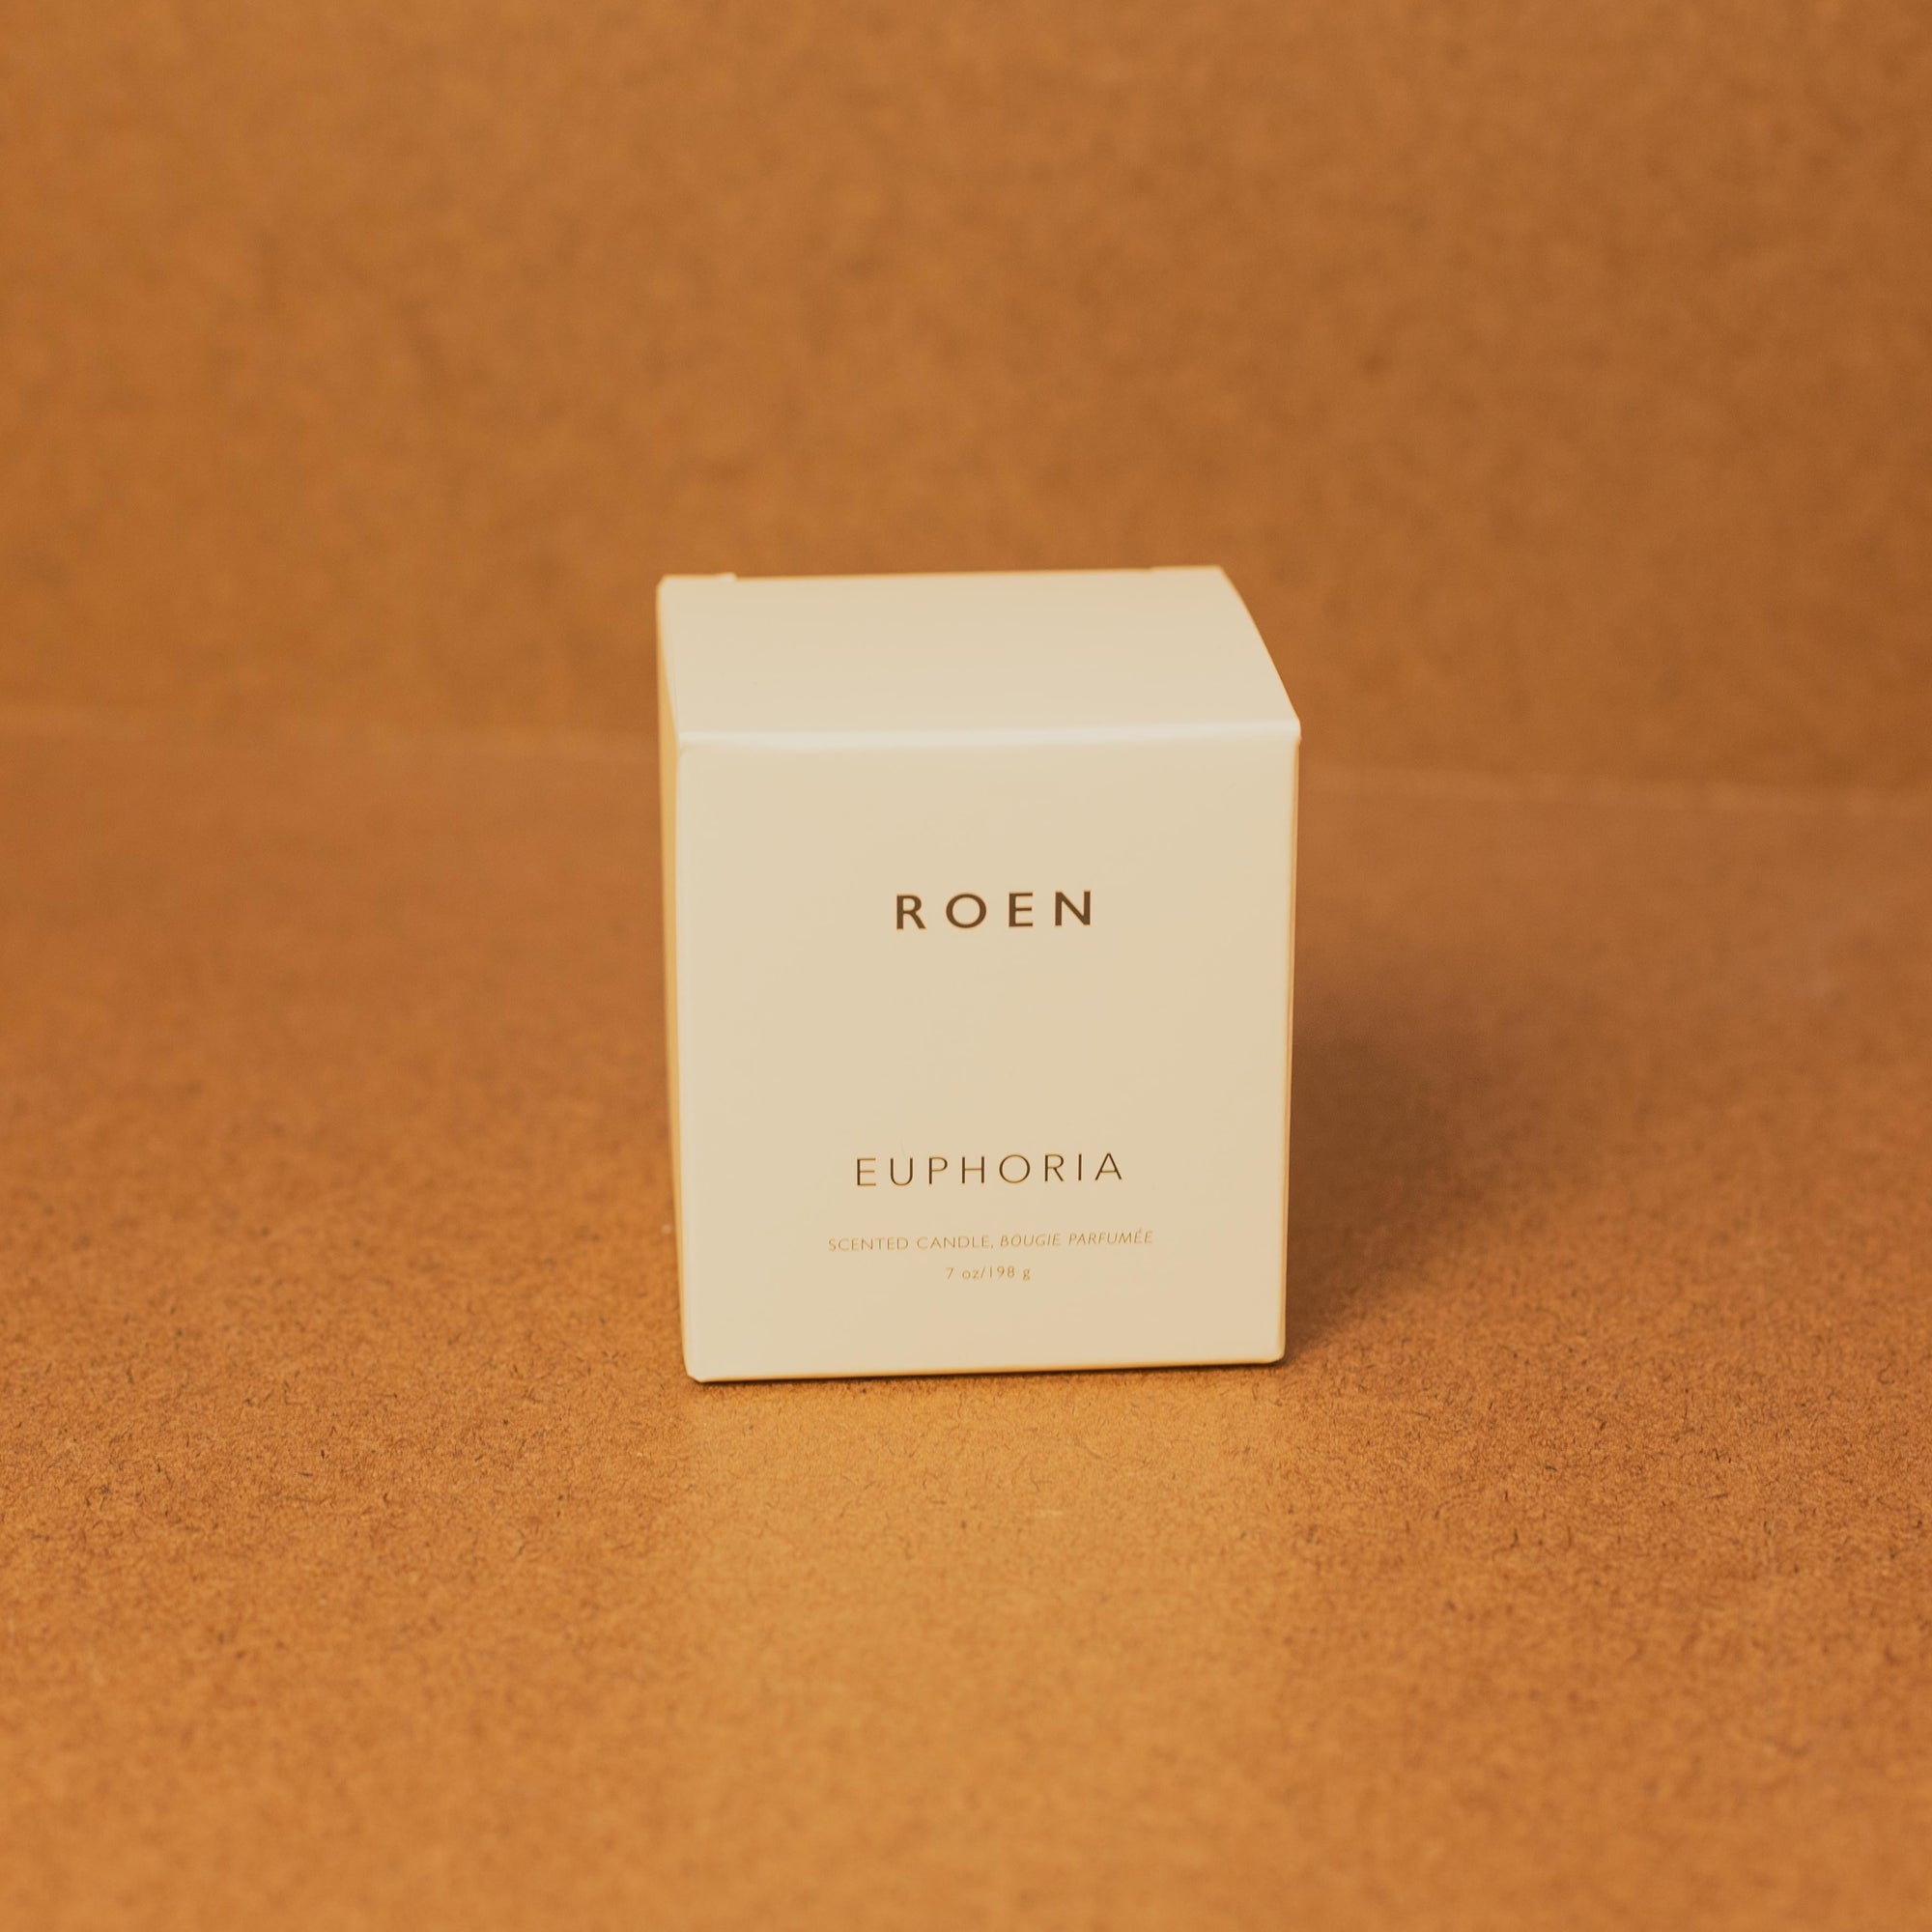 Roen Candles - Euphoria box front view